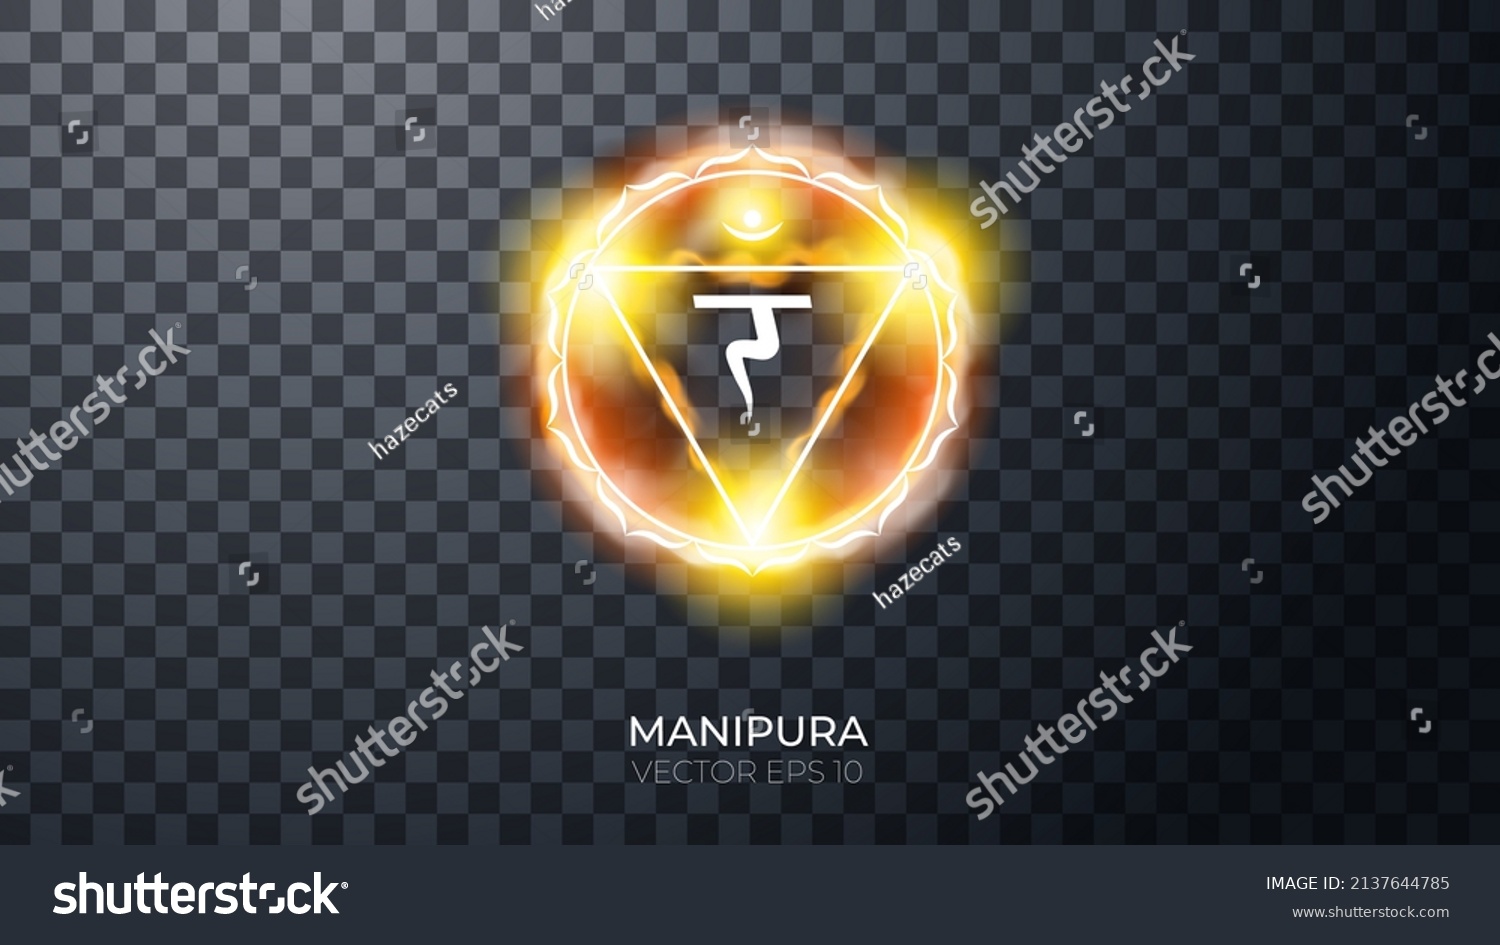 SVG of Third, solar plexus chakra - Manipura. Illustration of one of the seven chakras. Symbol of Hinduism, Buddhism. Ethereal strange fire sign. Decor elements for magic doctor, shaman, medium. svg